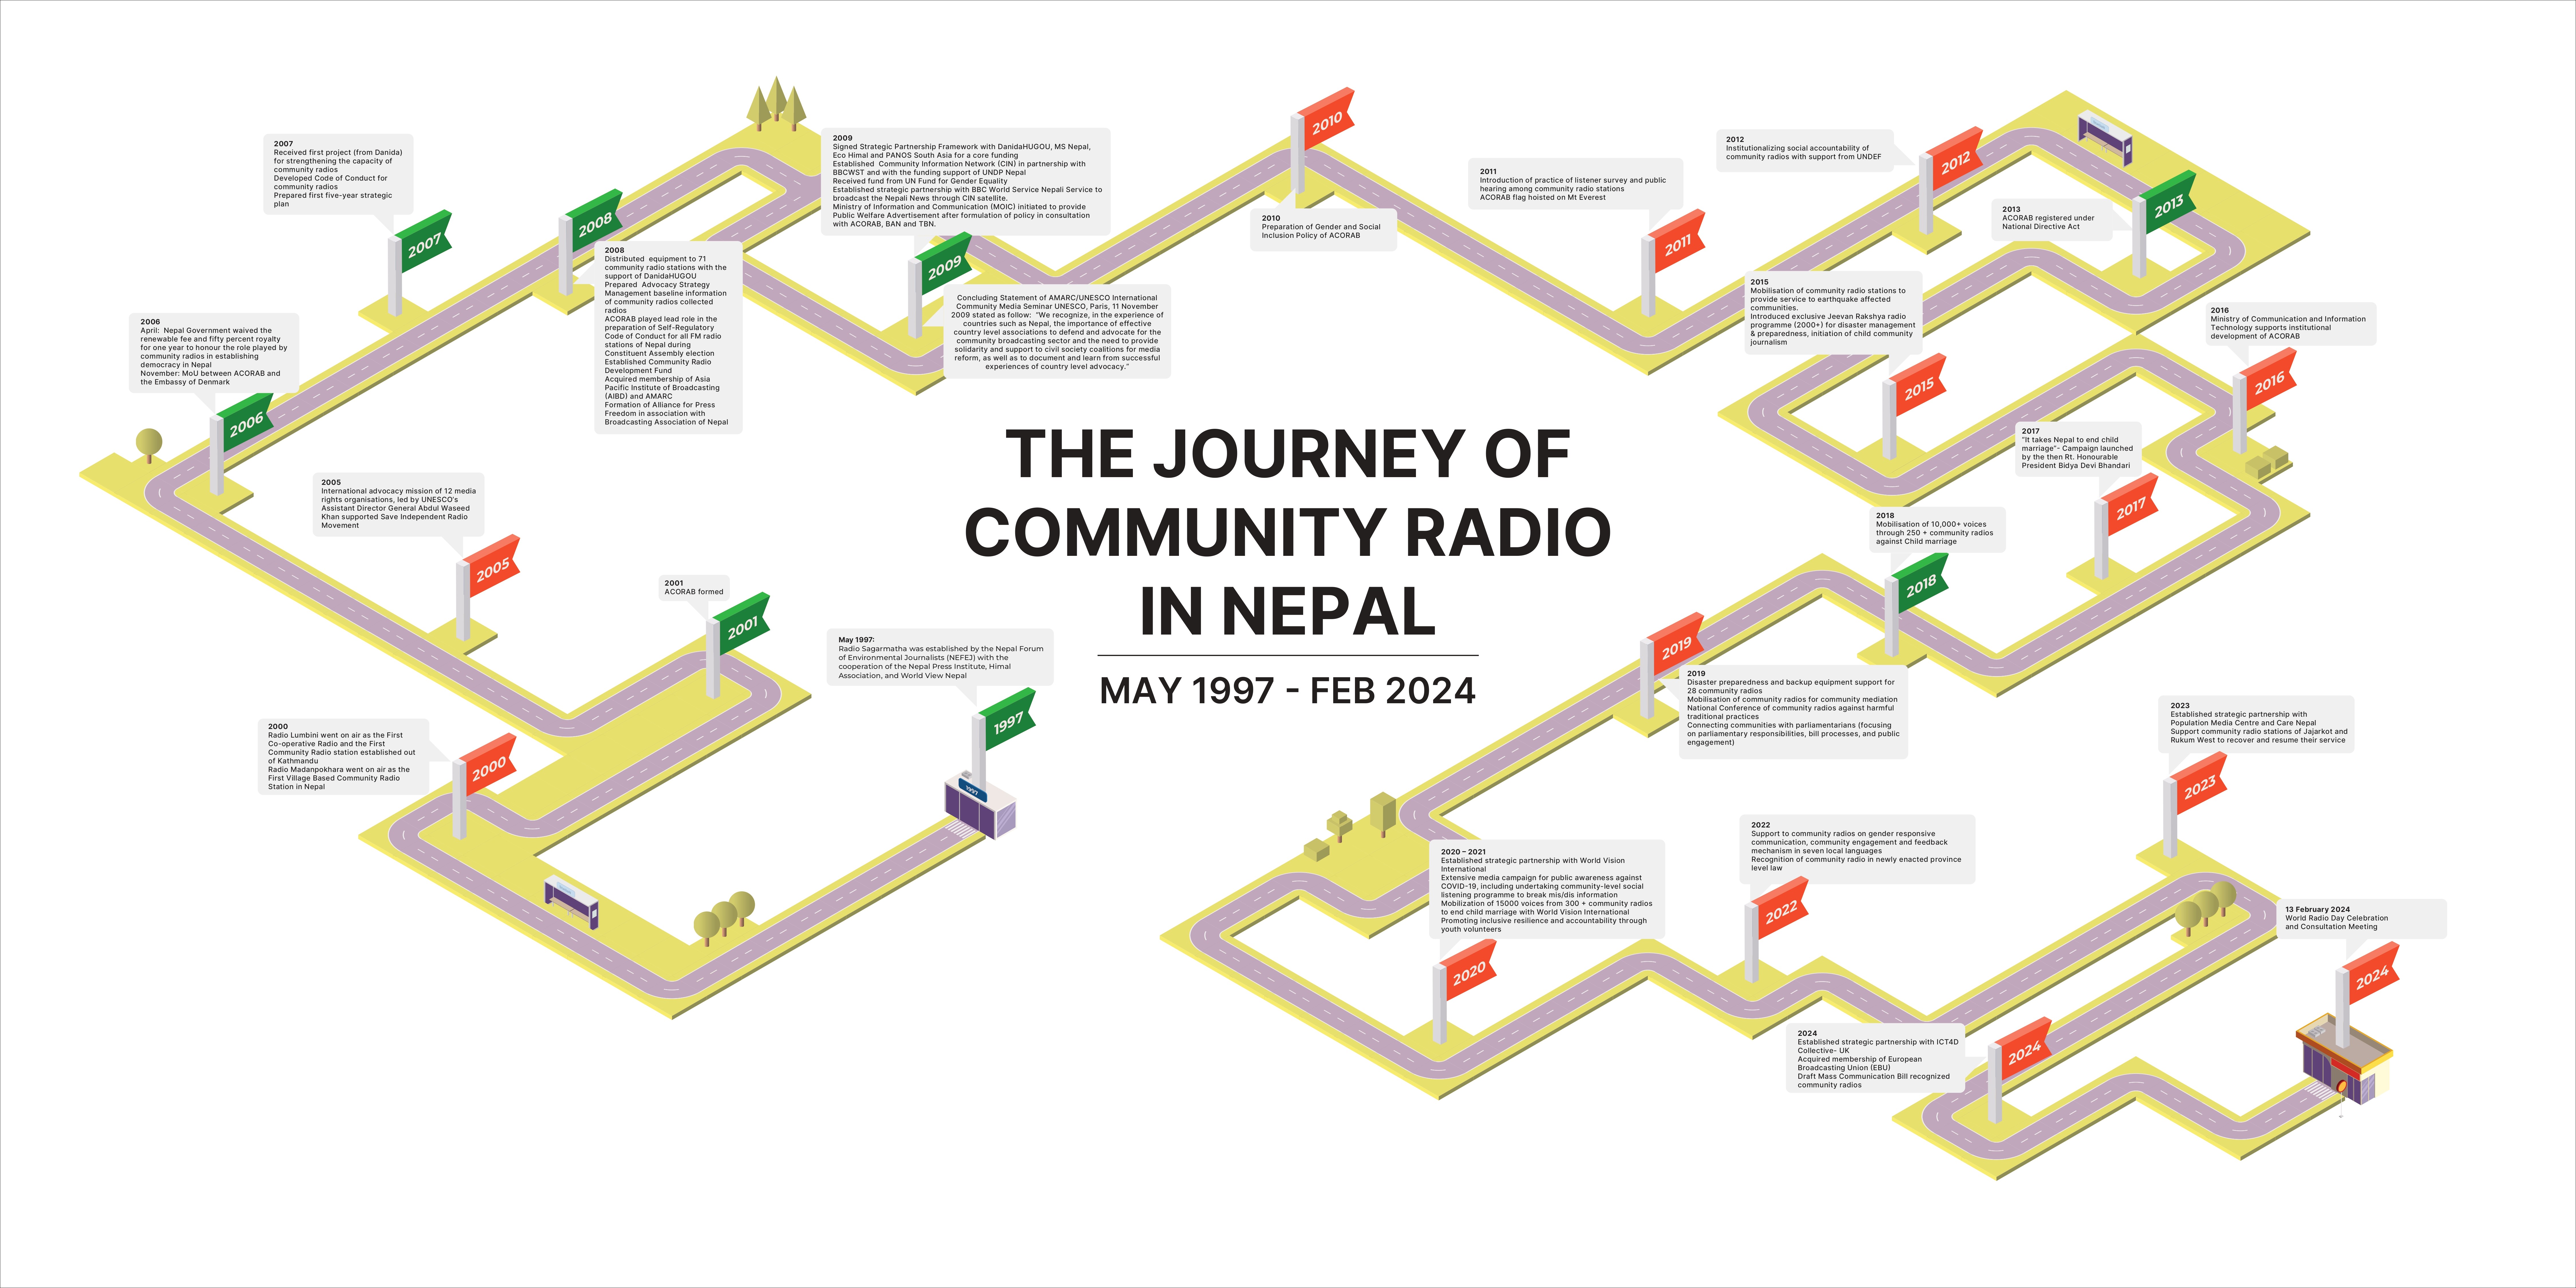 The Journey of Community Radio in Nepal